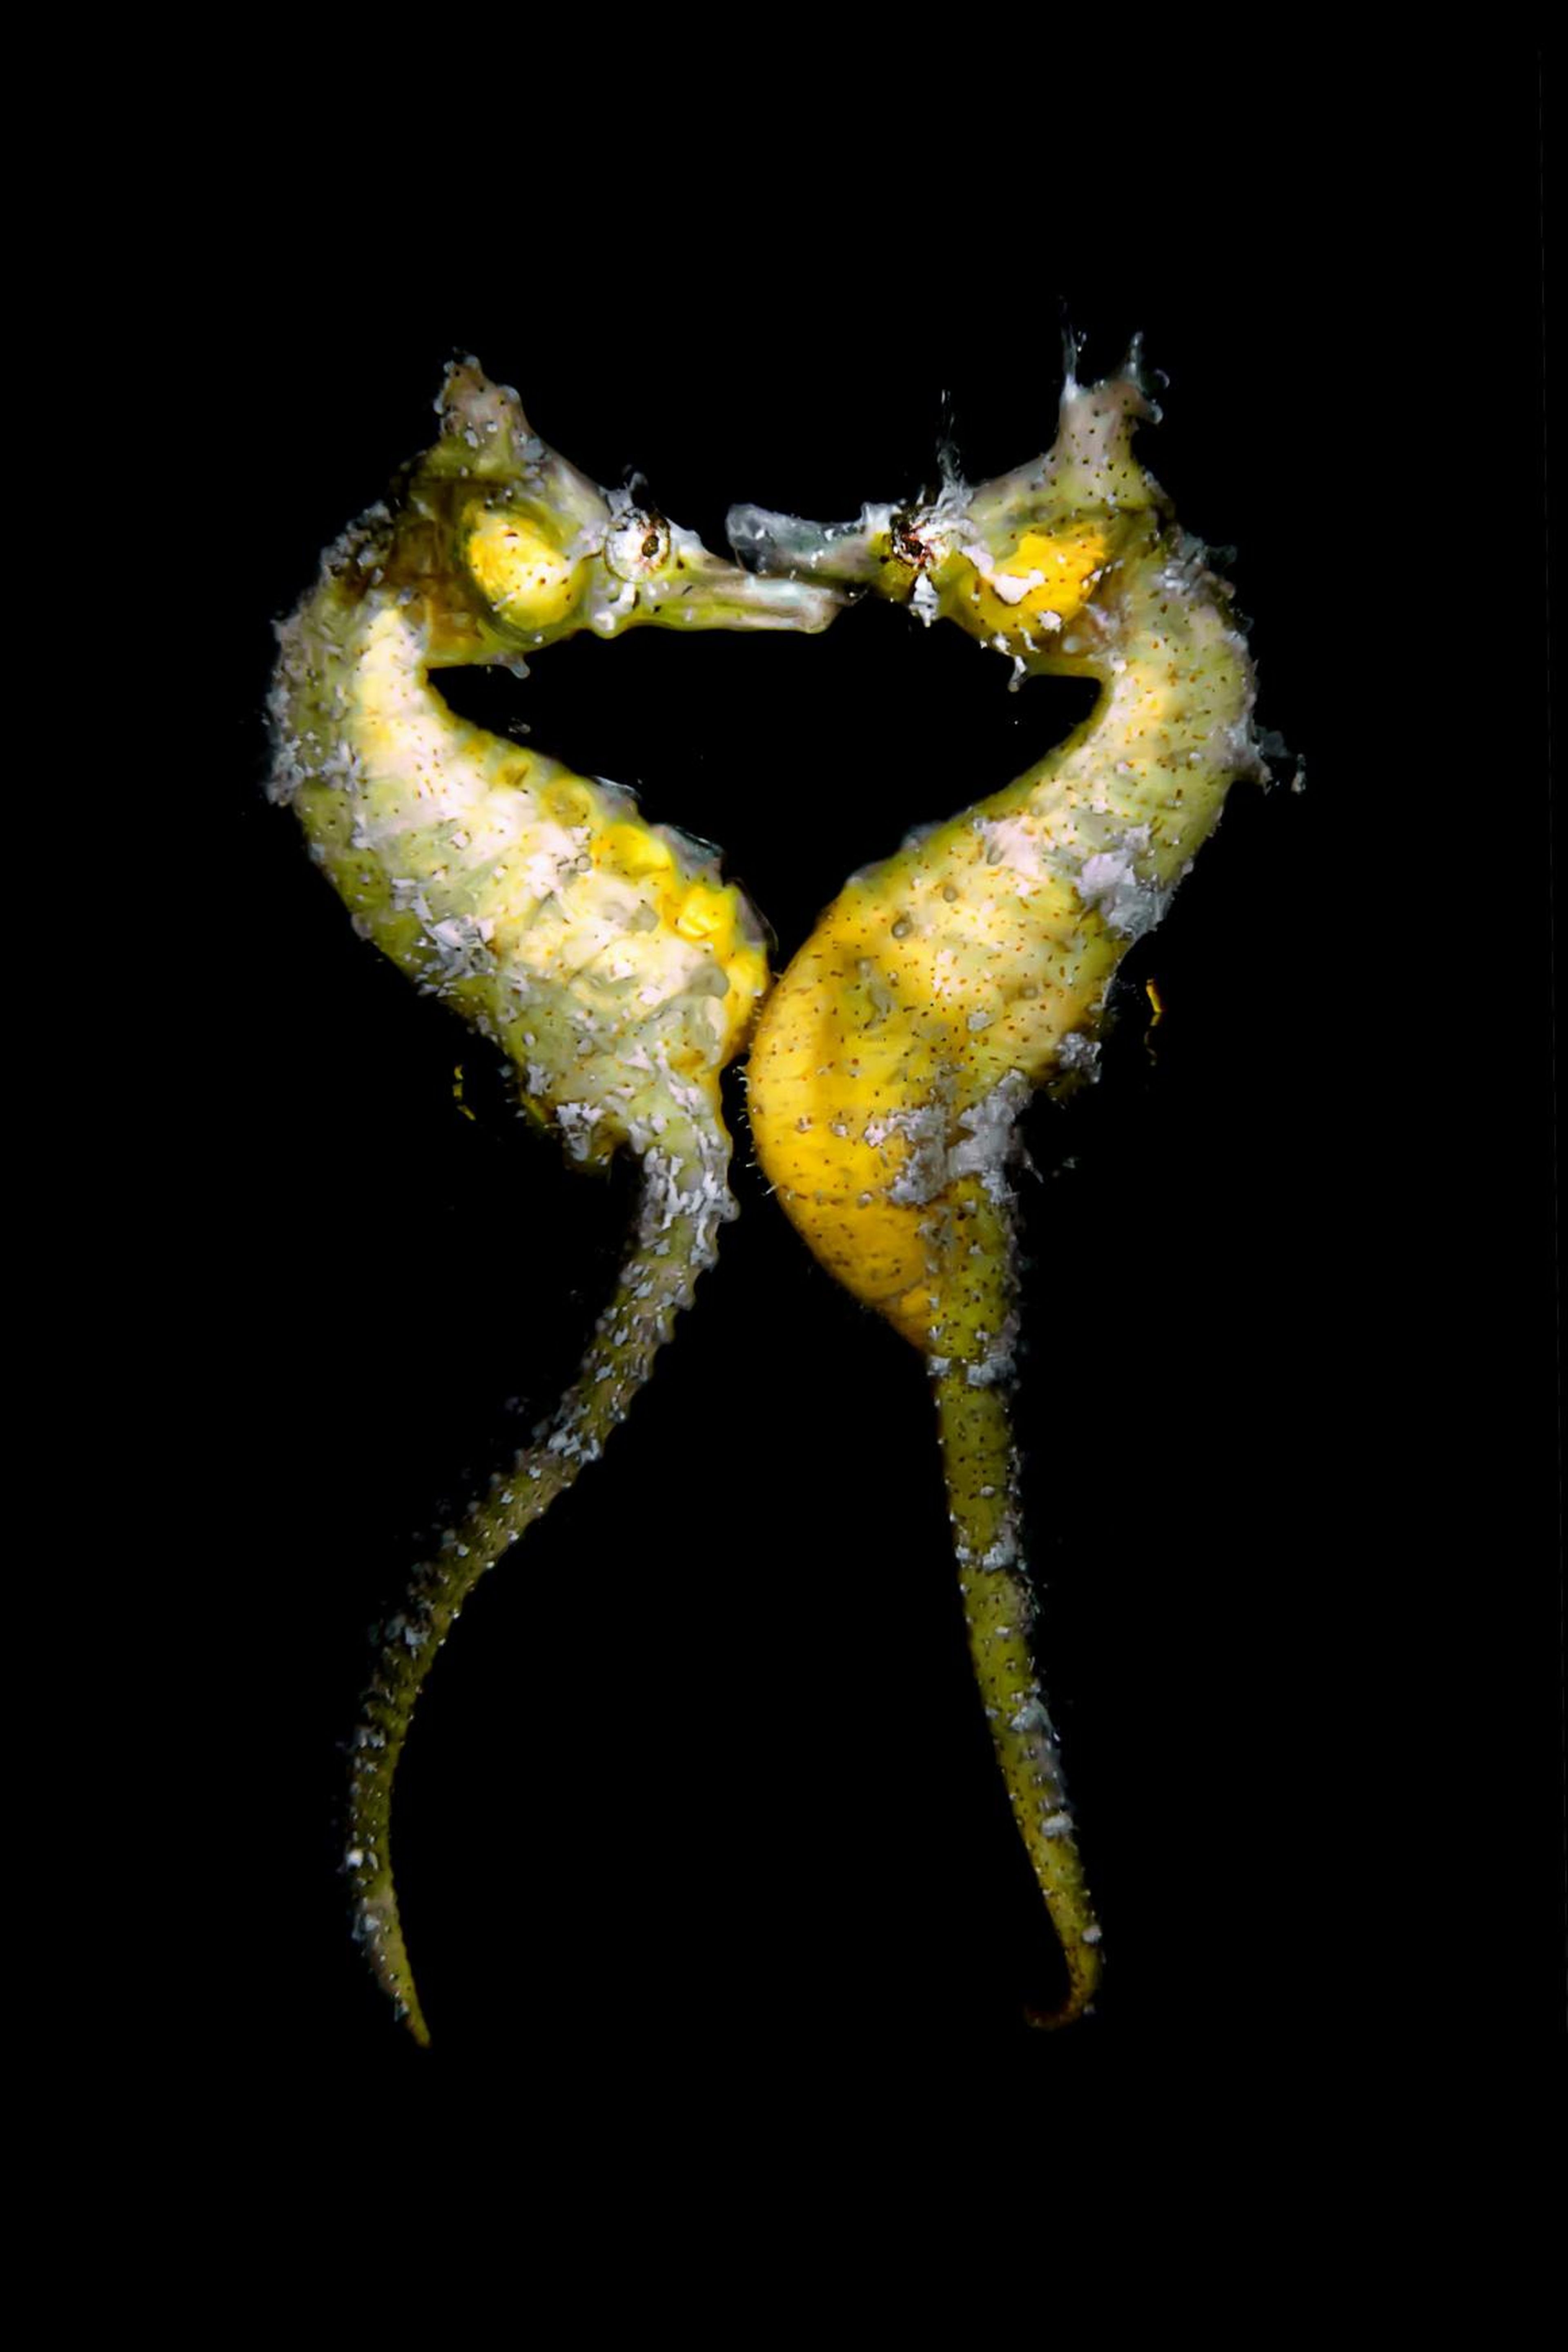 Photographer Jinggong Zhang snapped this photo of seahorses mating in Japan.